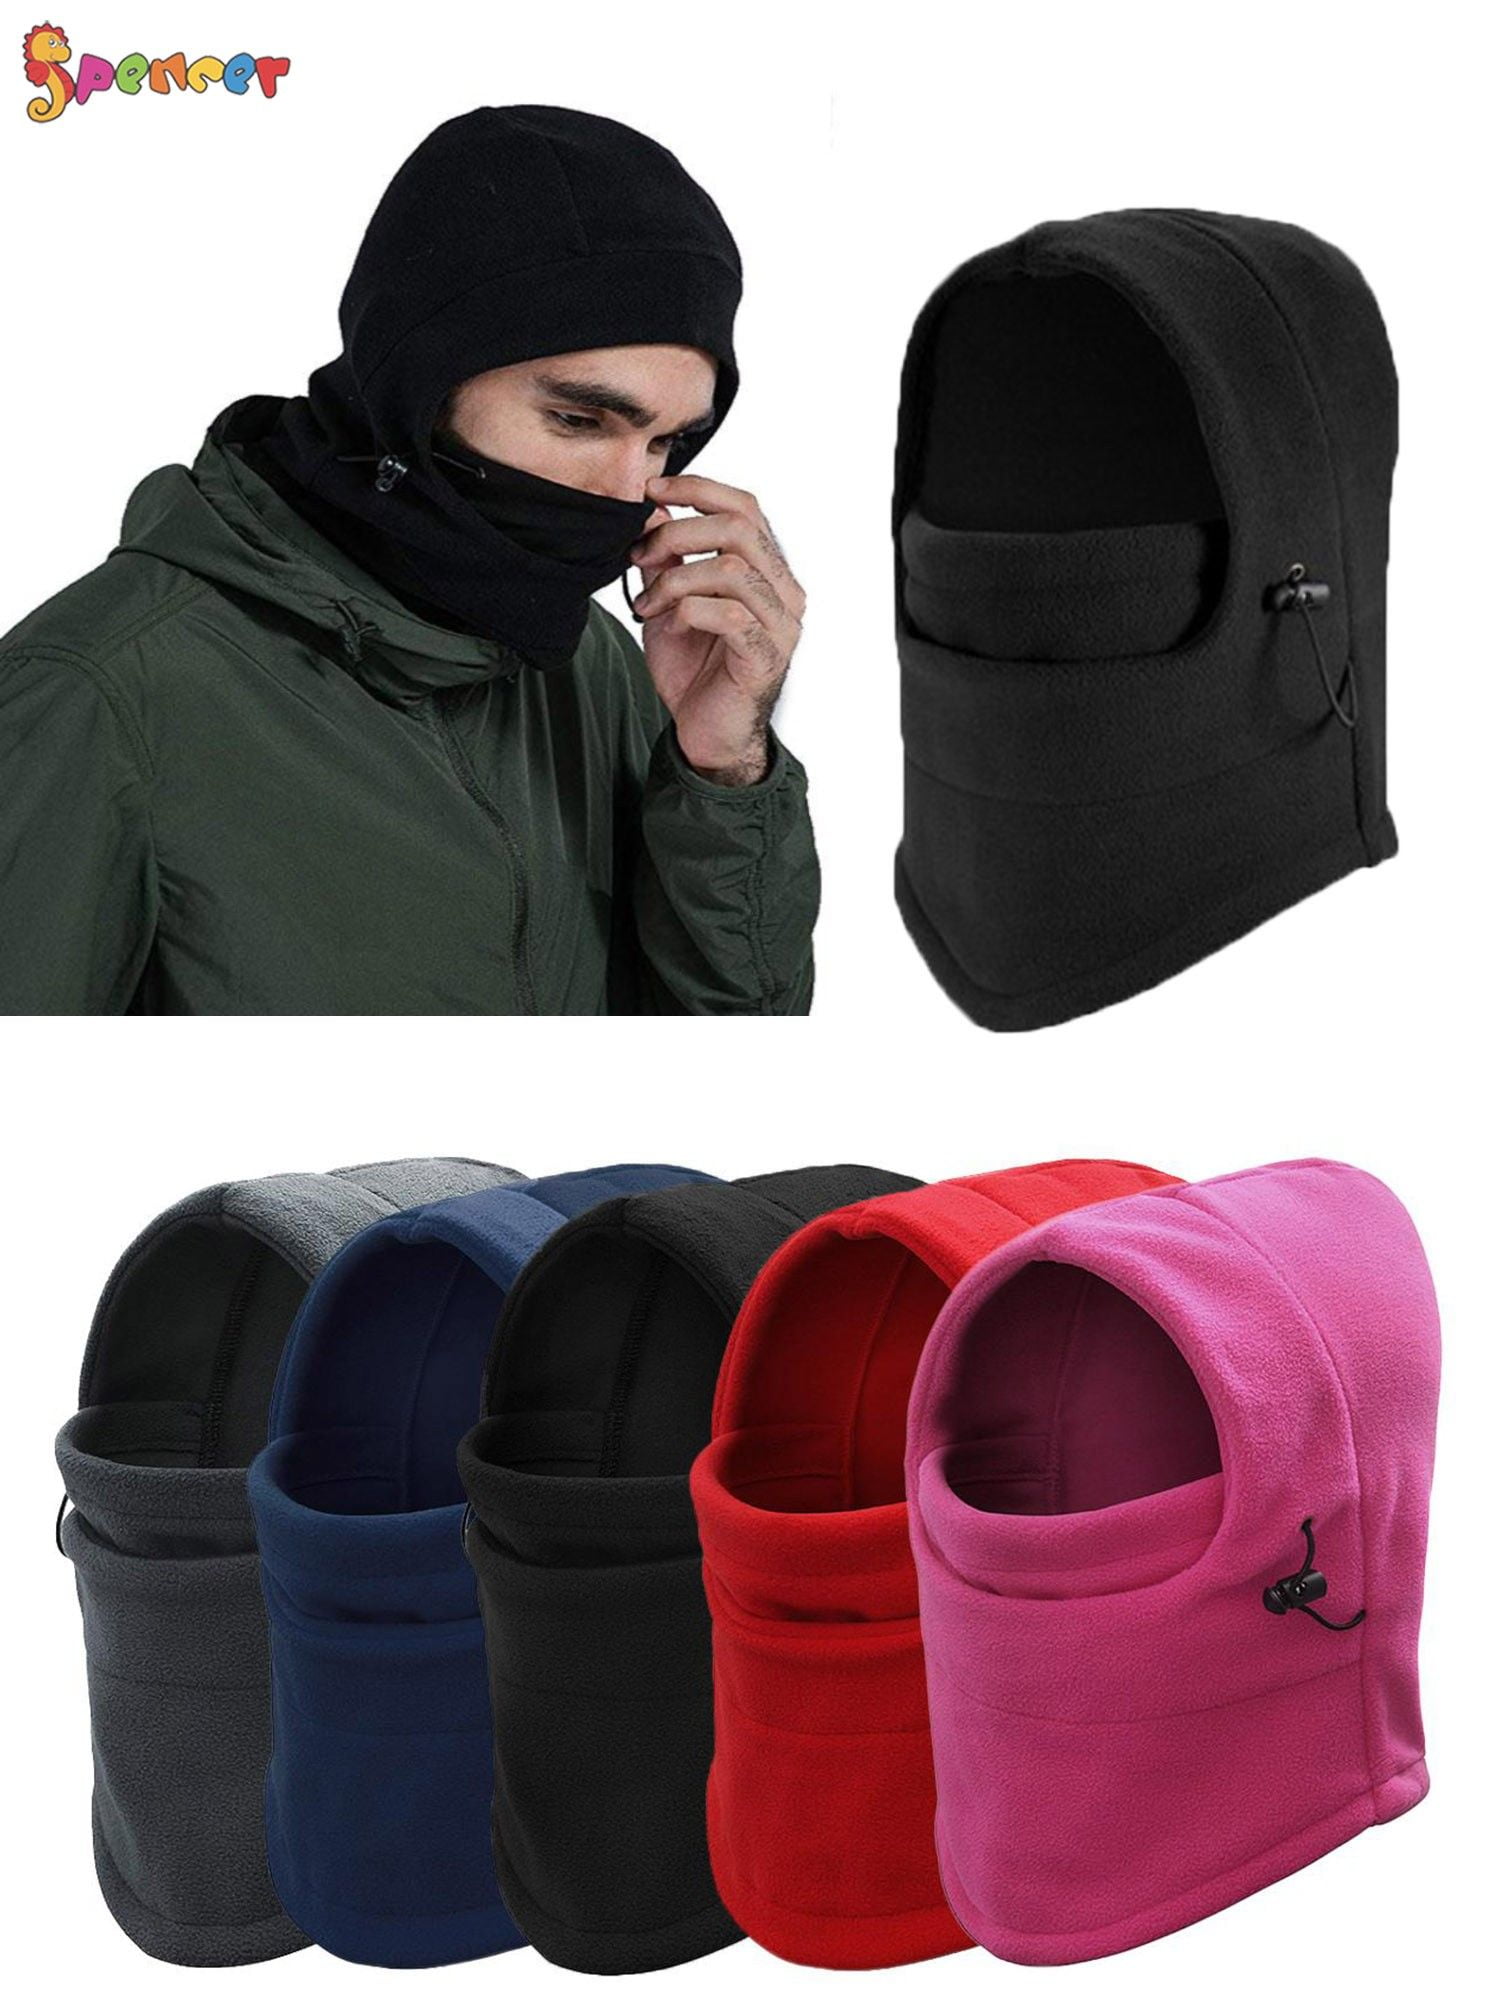 Winter Thermal Fleece Balaclava Neck Warmer Full Face Mask Cap Head Cover Hat